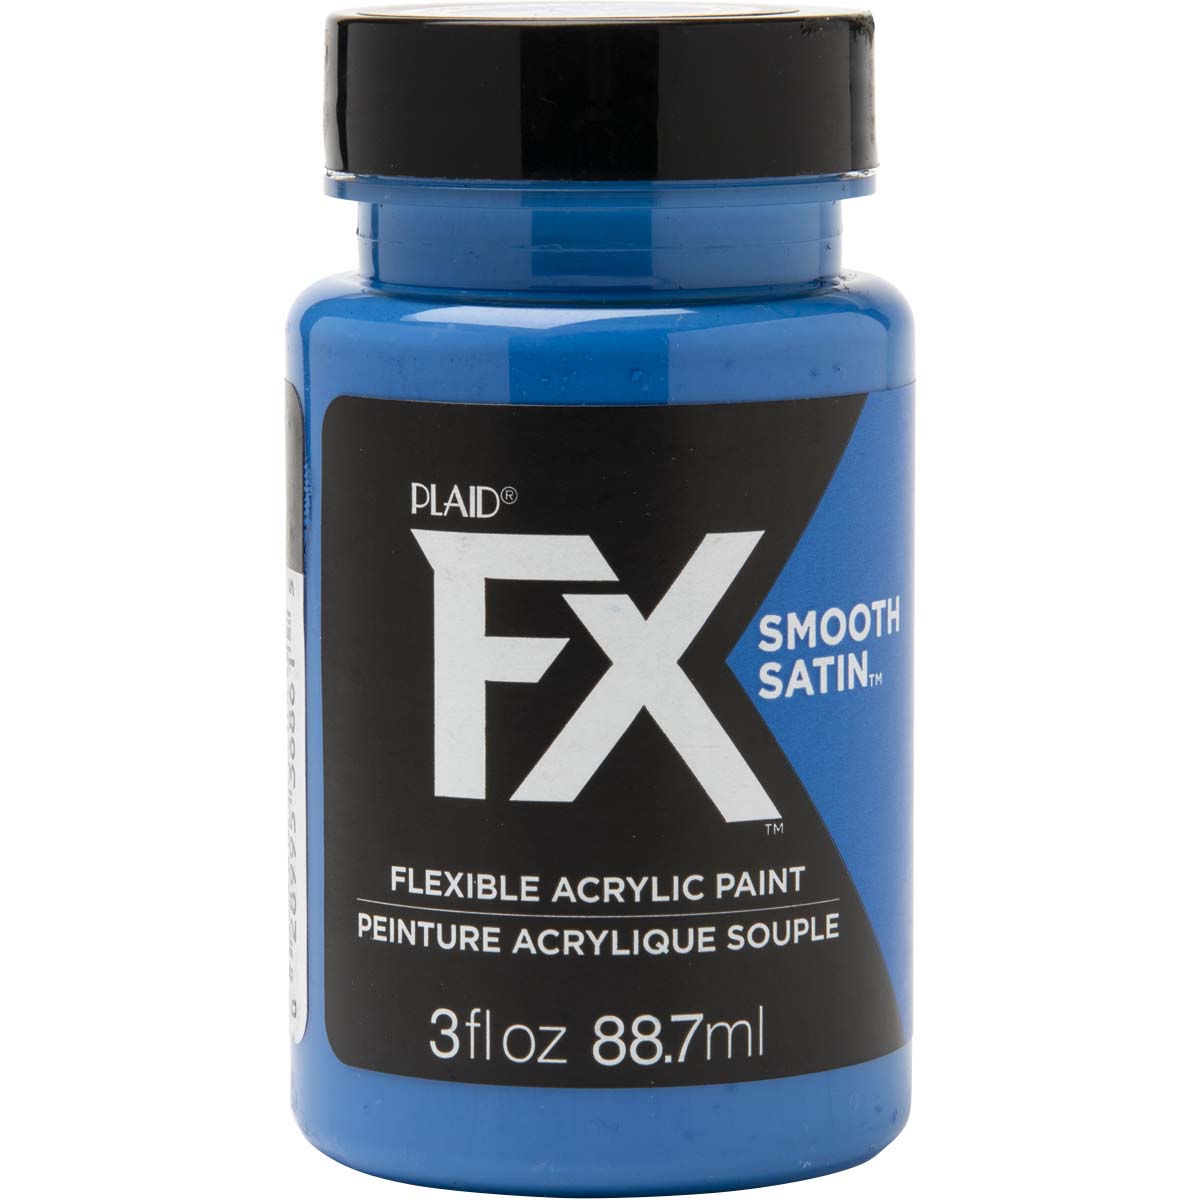 PlaidFX Smooth Satin Flexible Acrylic Paint - Beta Blue, 3 oz. - 36861